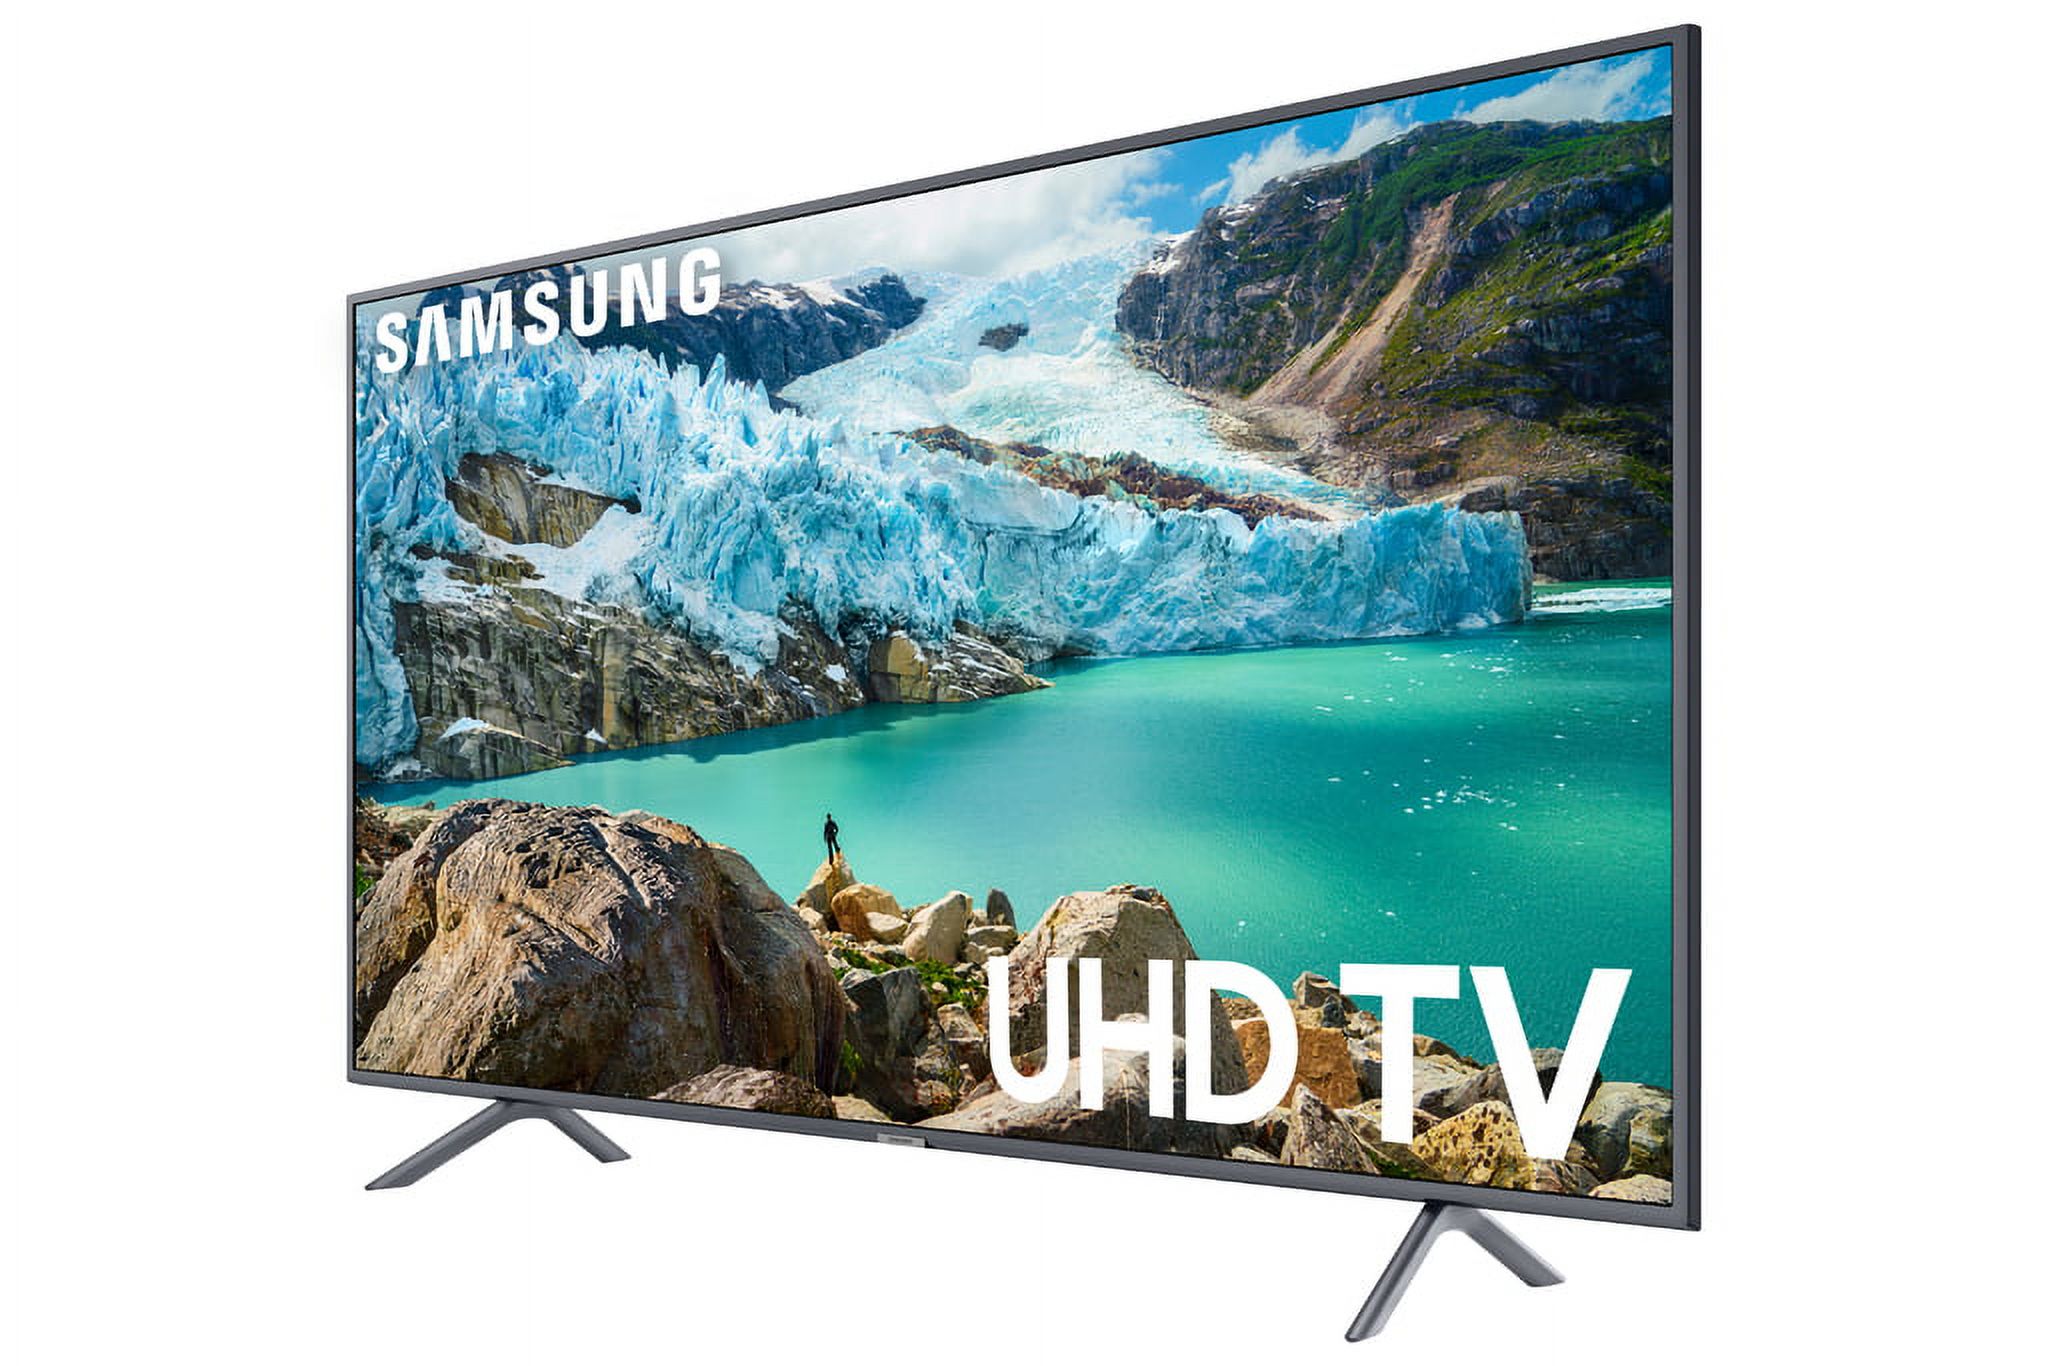 SAMSUNG 50" Class 4K Ultra HD (2160P) HDR Smart LED TV UN50RU7200 (2019 Model) - image 3 of 8